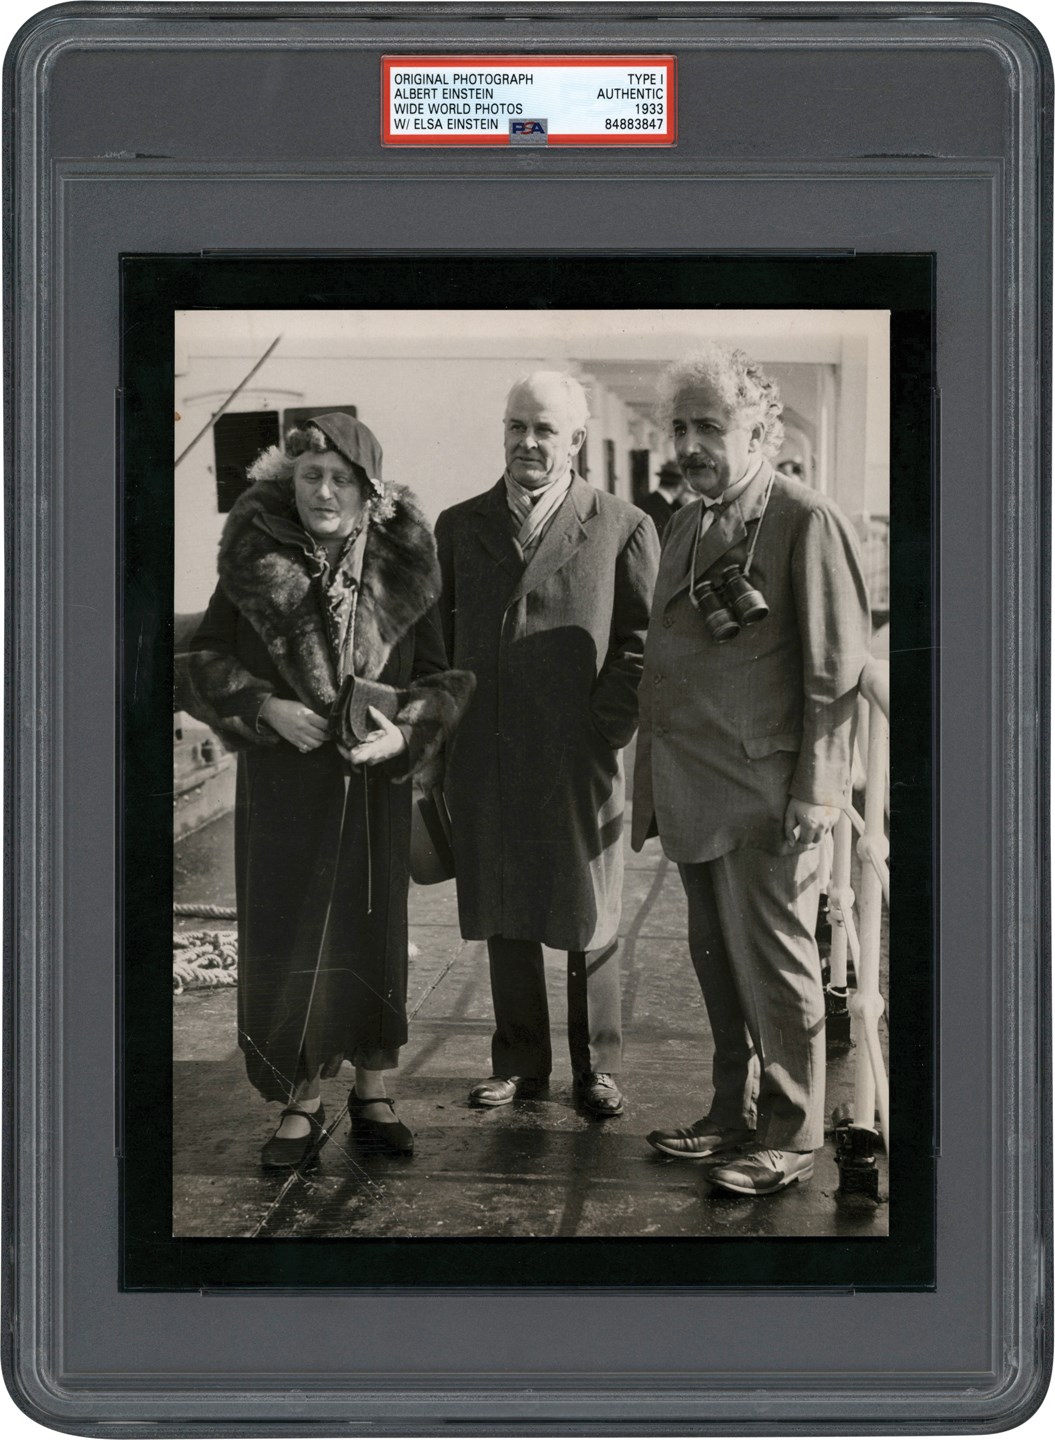 - 1933 Albert Einstein & Wife Photograph (PSA Type I)